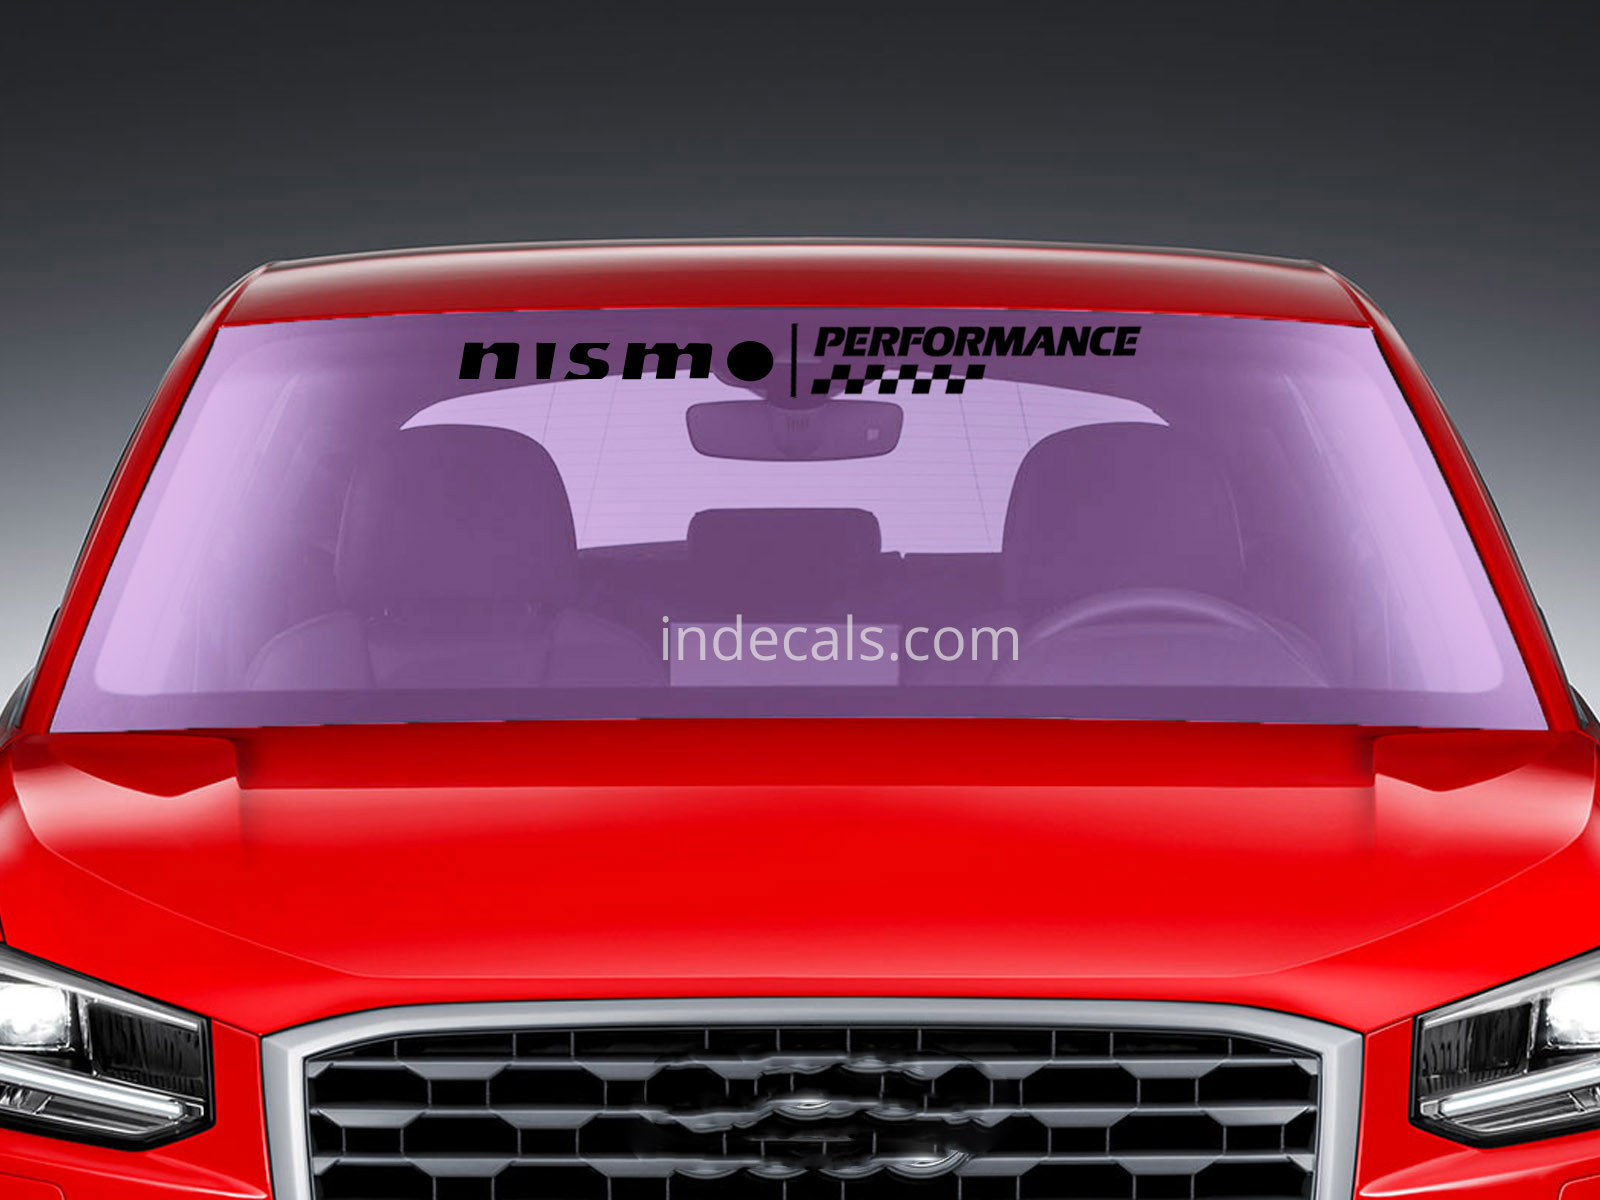 1 x Nismo Performance Sticker for Windshield or Back Window - Black